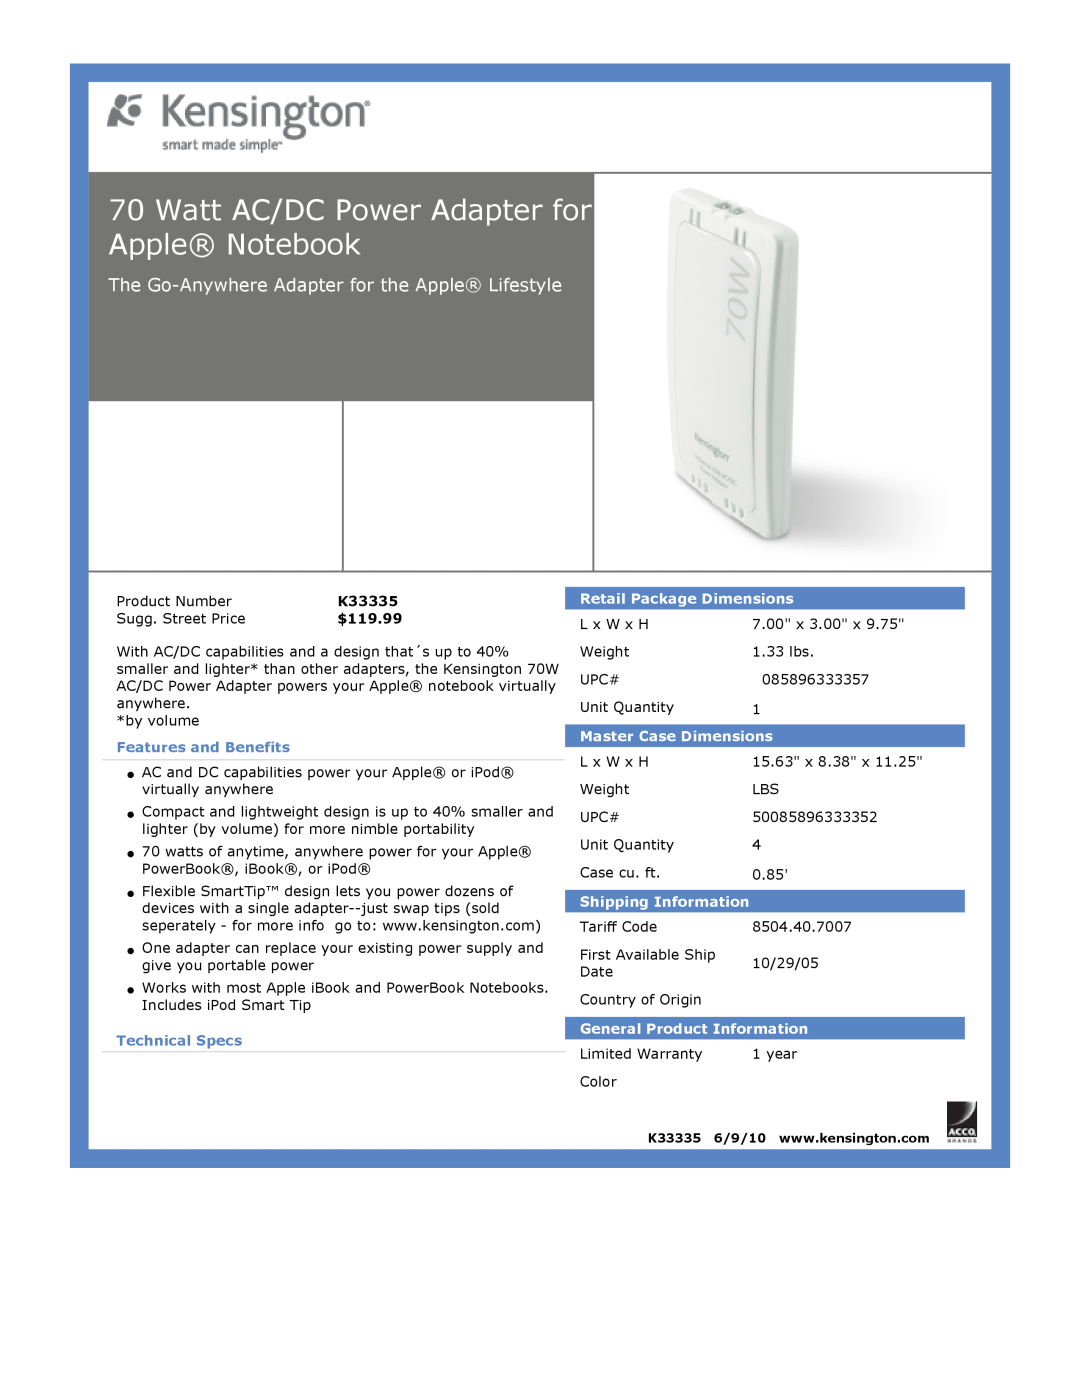 Kensington EU64325 Watt AC/DC Power Adapter for Apple Notebook, The Go-AnywhereAdapter for the Apple Lifestyle, K33335 